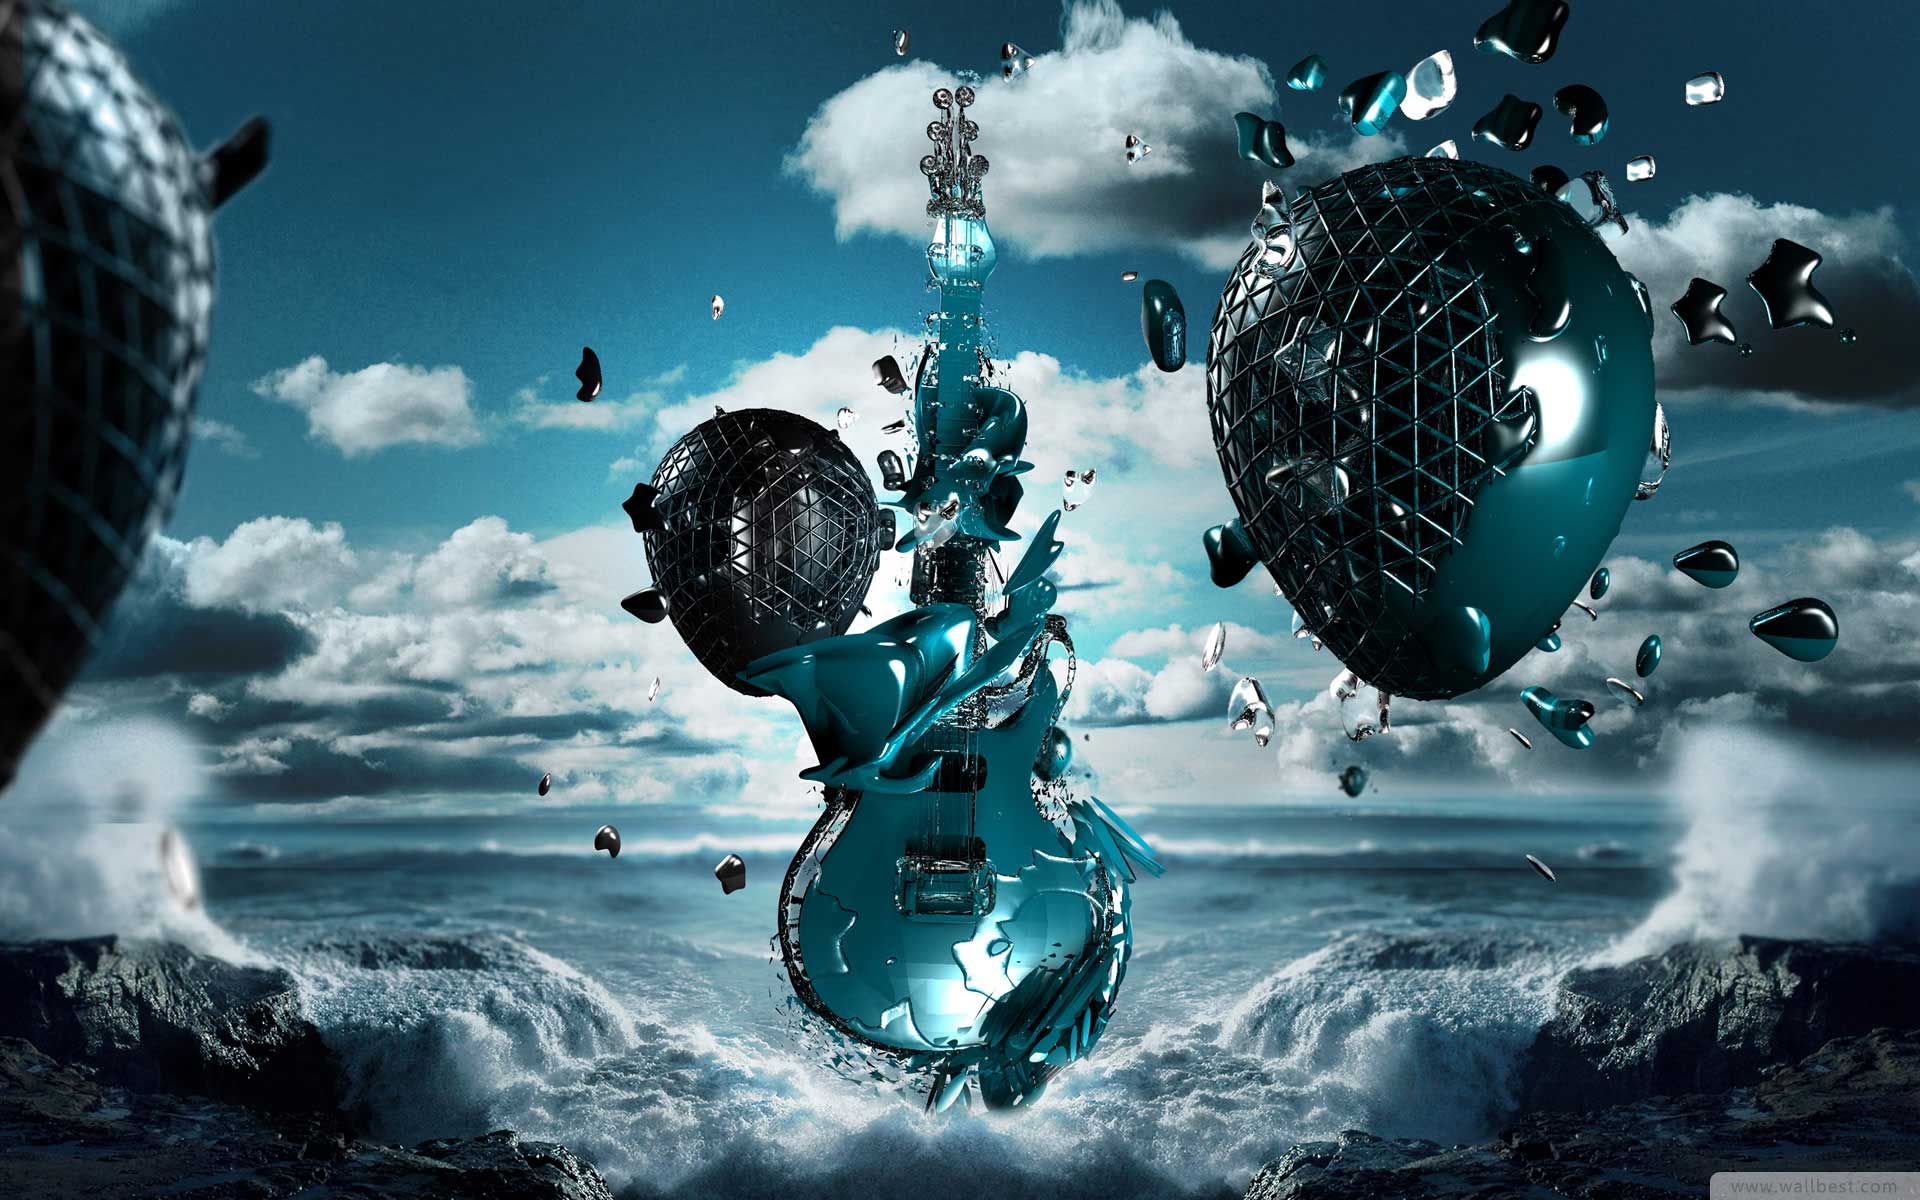 Guitar Alien Water 3d Wallpaper Widescreen At GetHDpic